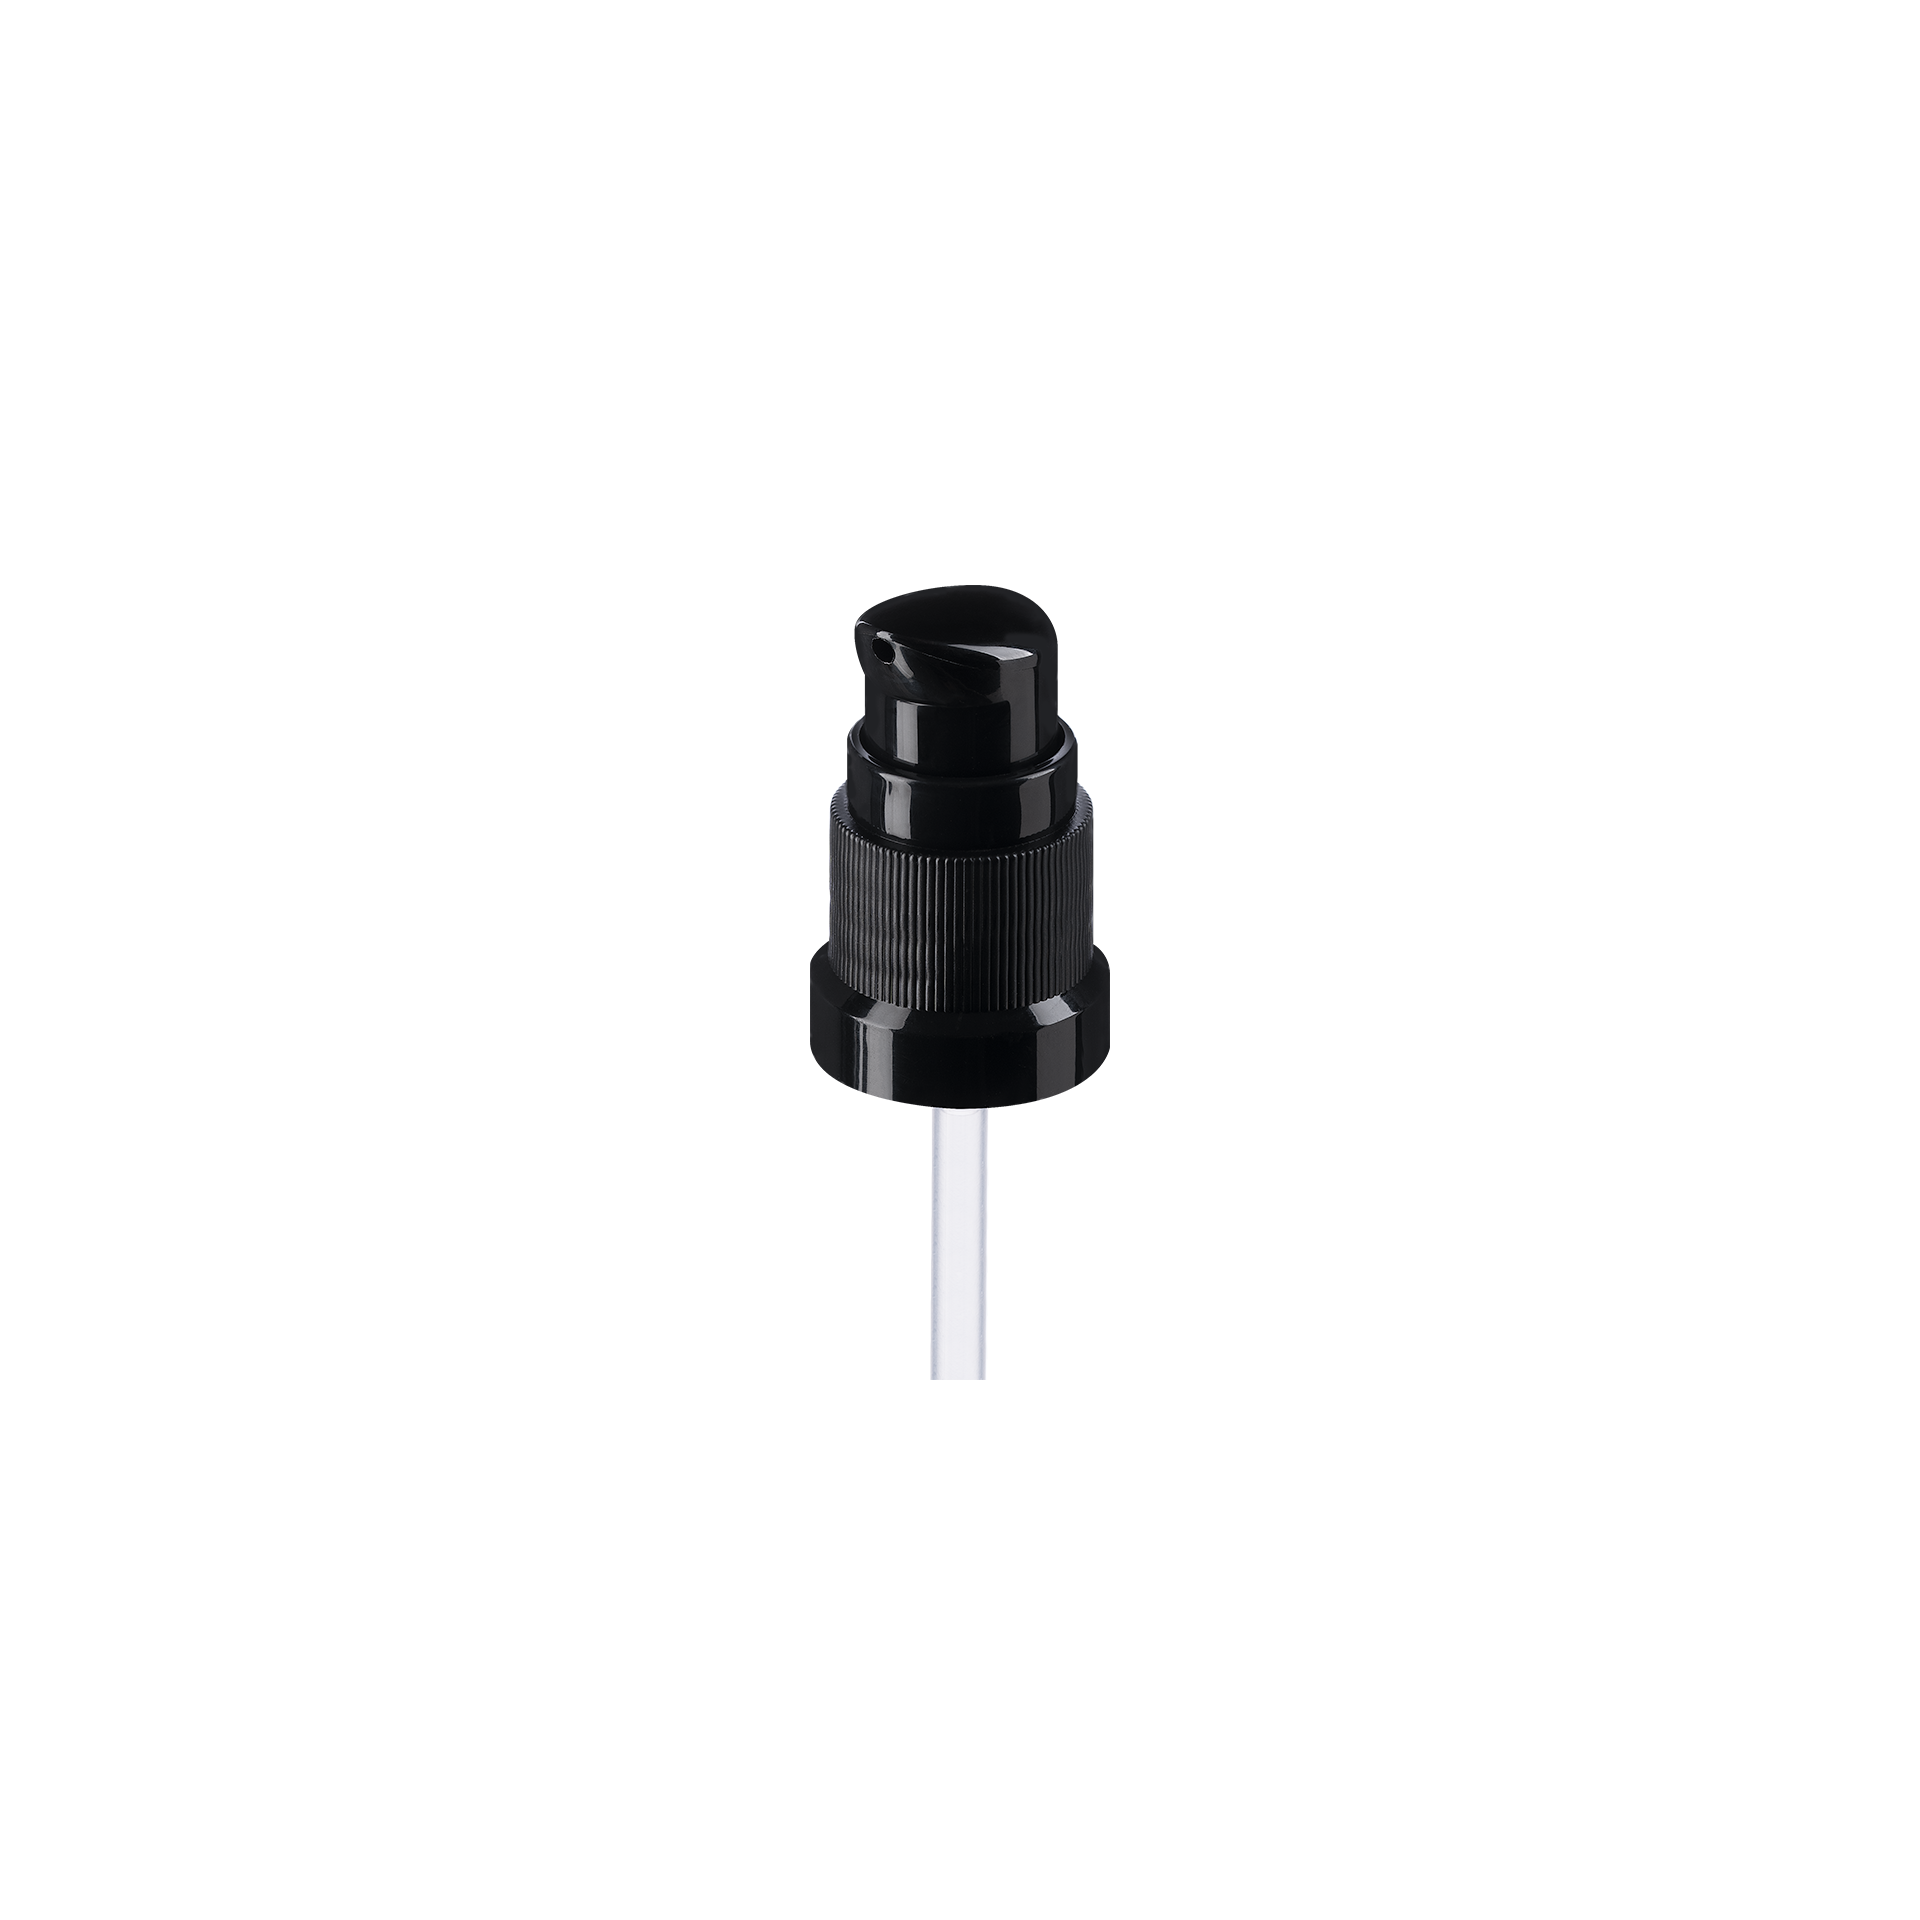 Lotion pump Metropolitan DIN18, PP, black, dose 0.10ml, black security clip (Jasmine 15)